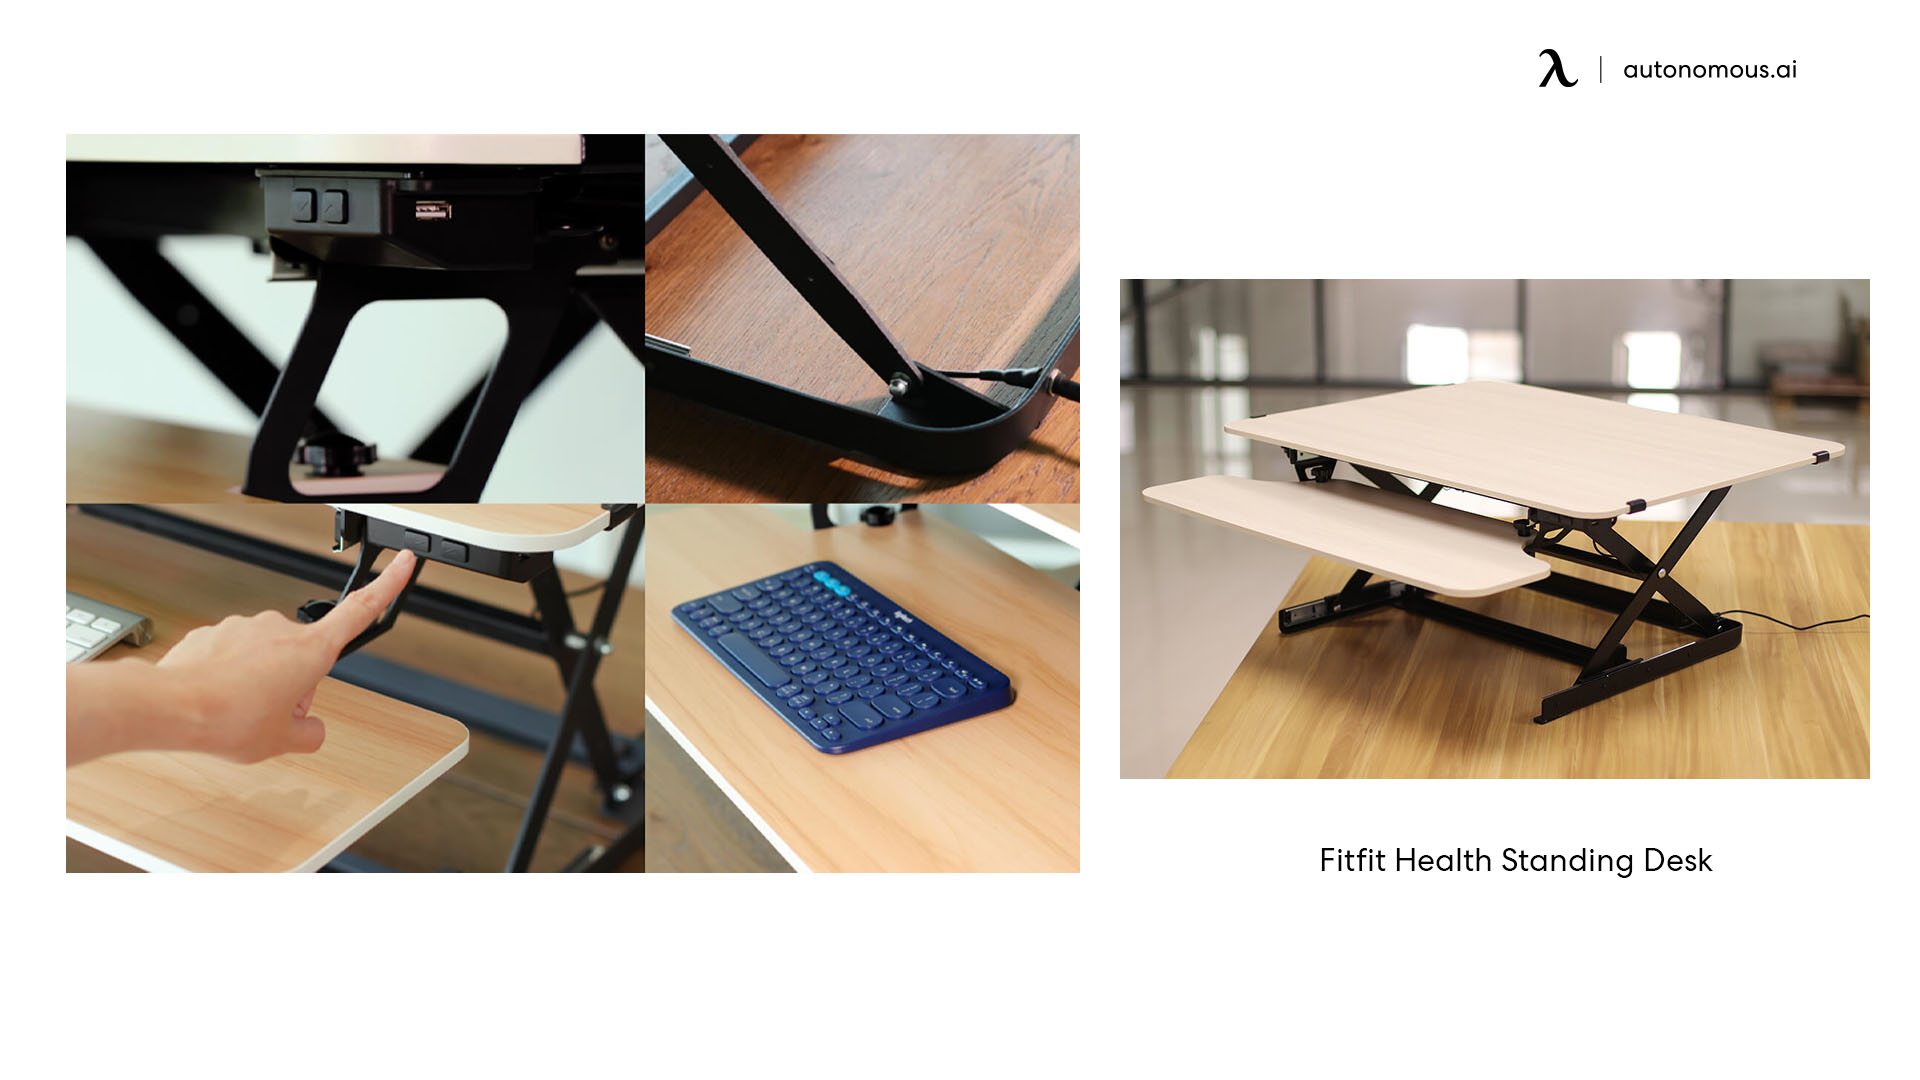 Fitfit Health Standing Desk